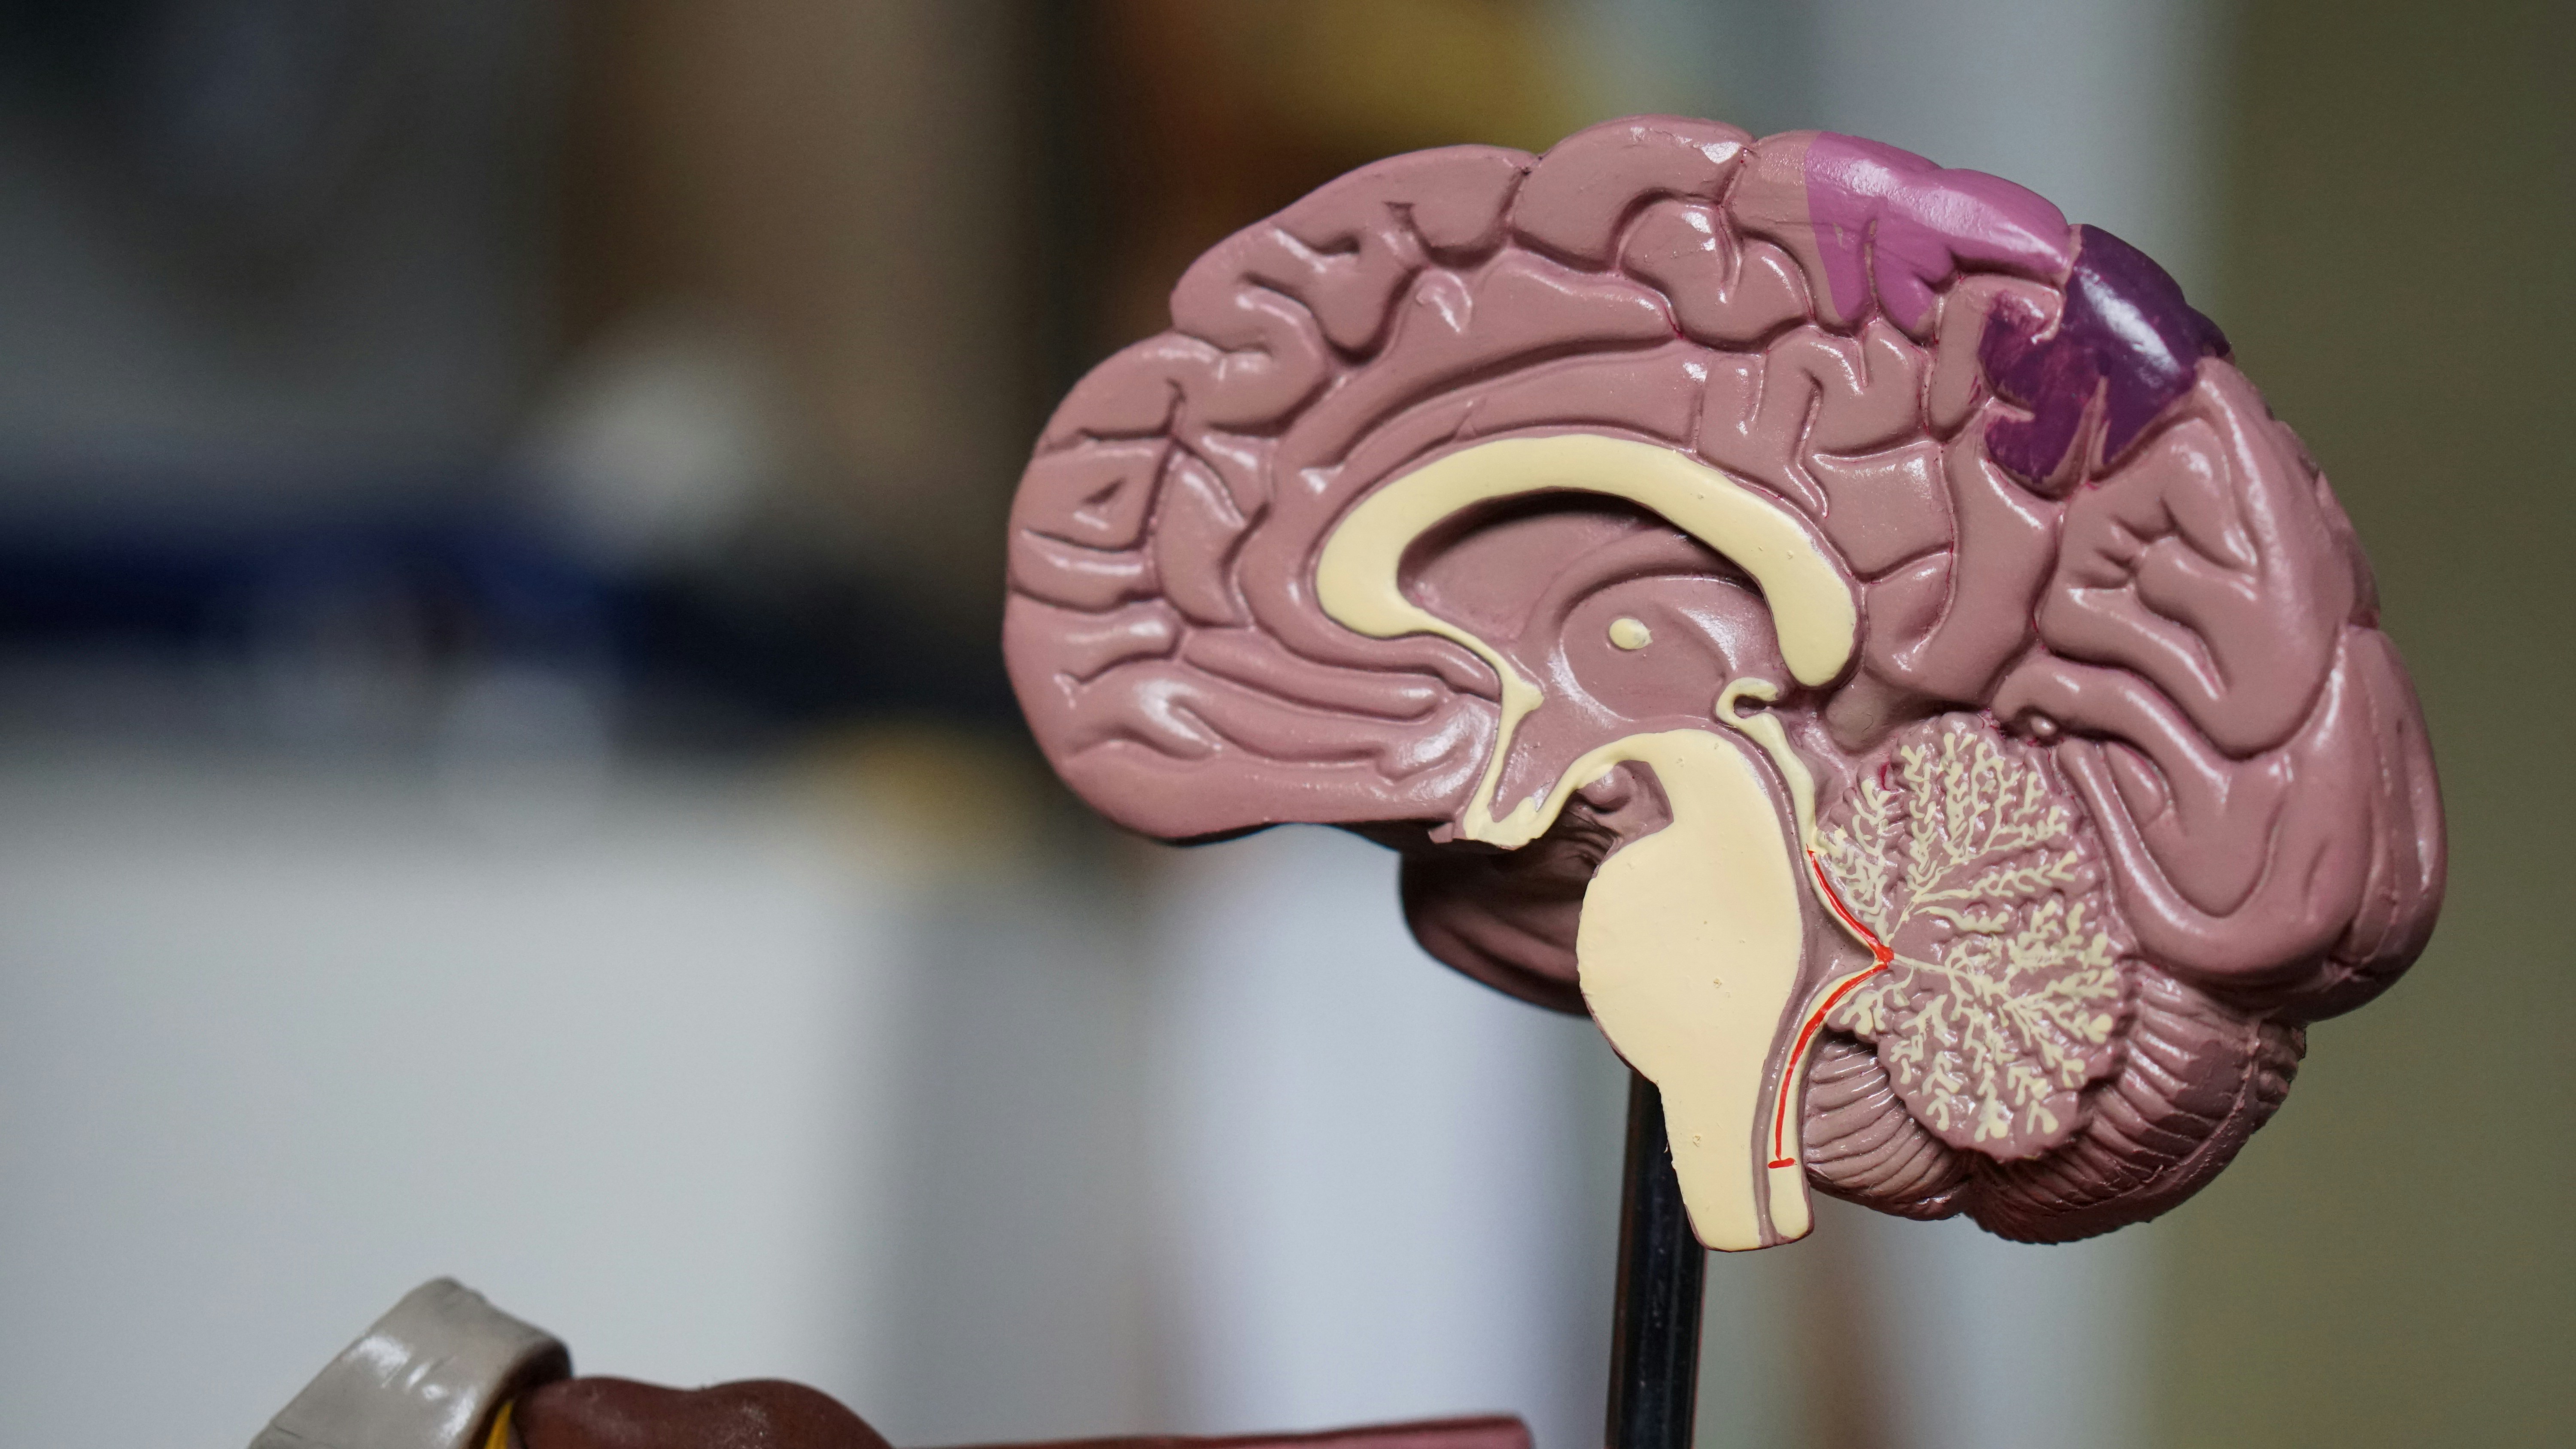 Image of a model human brain